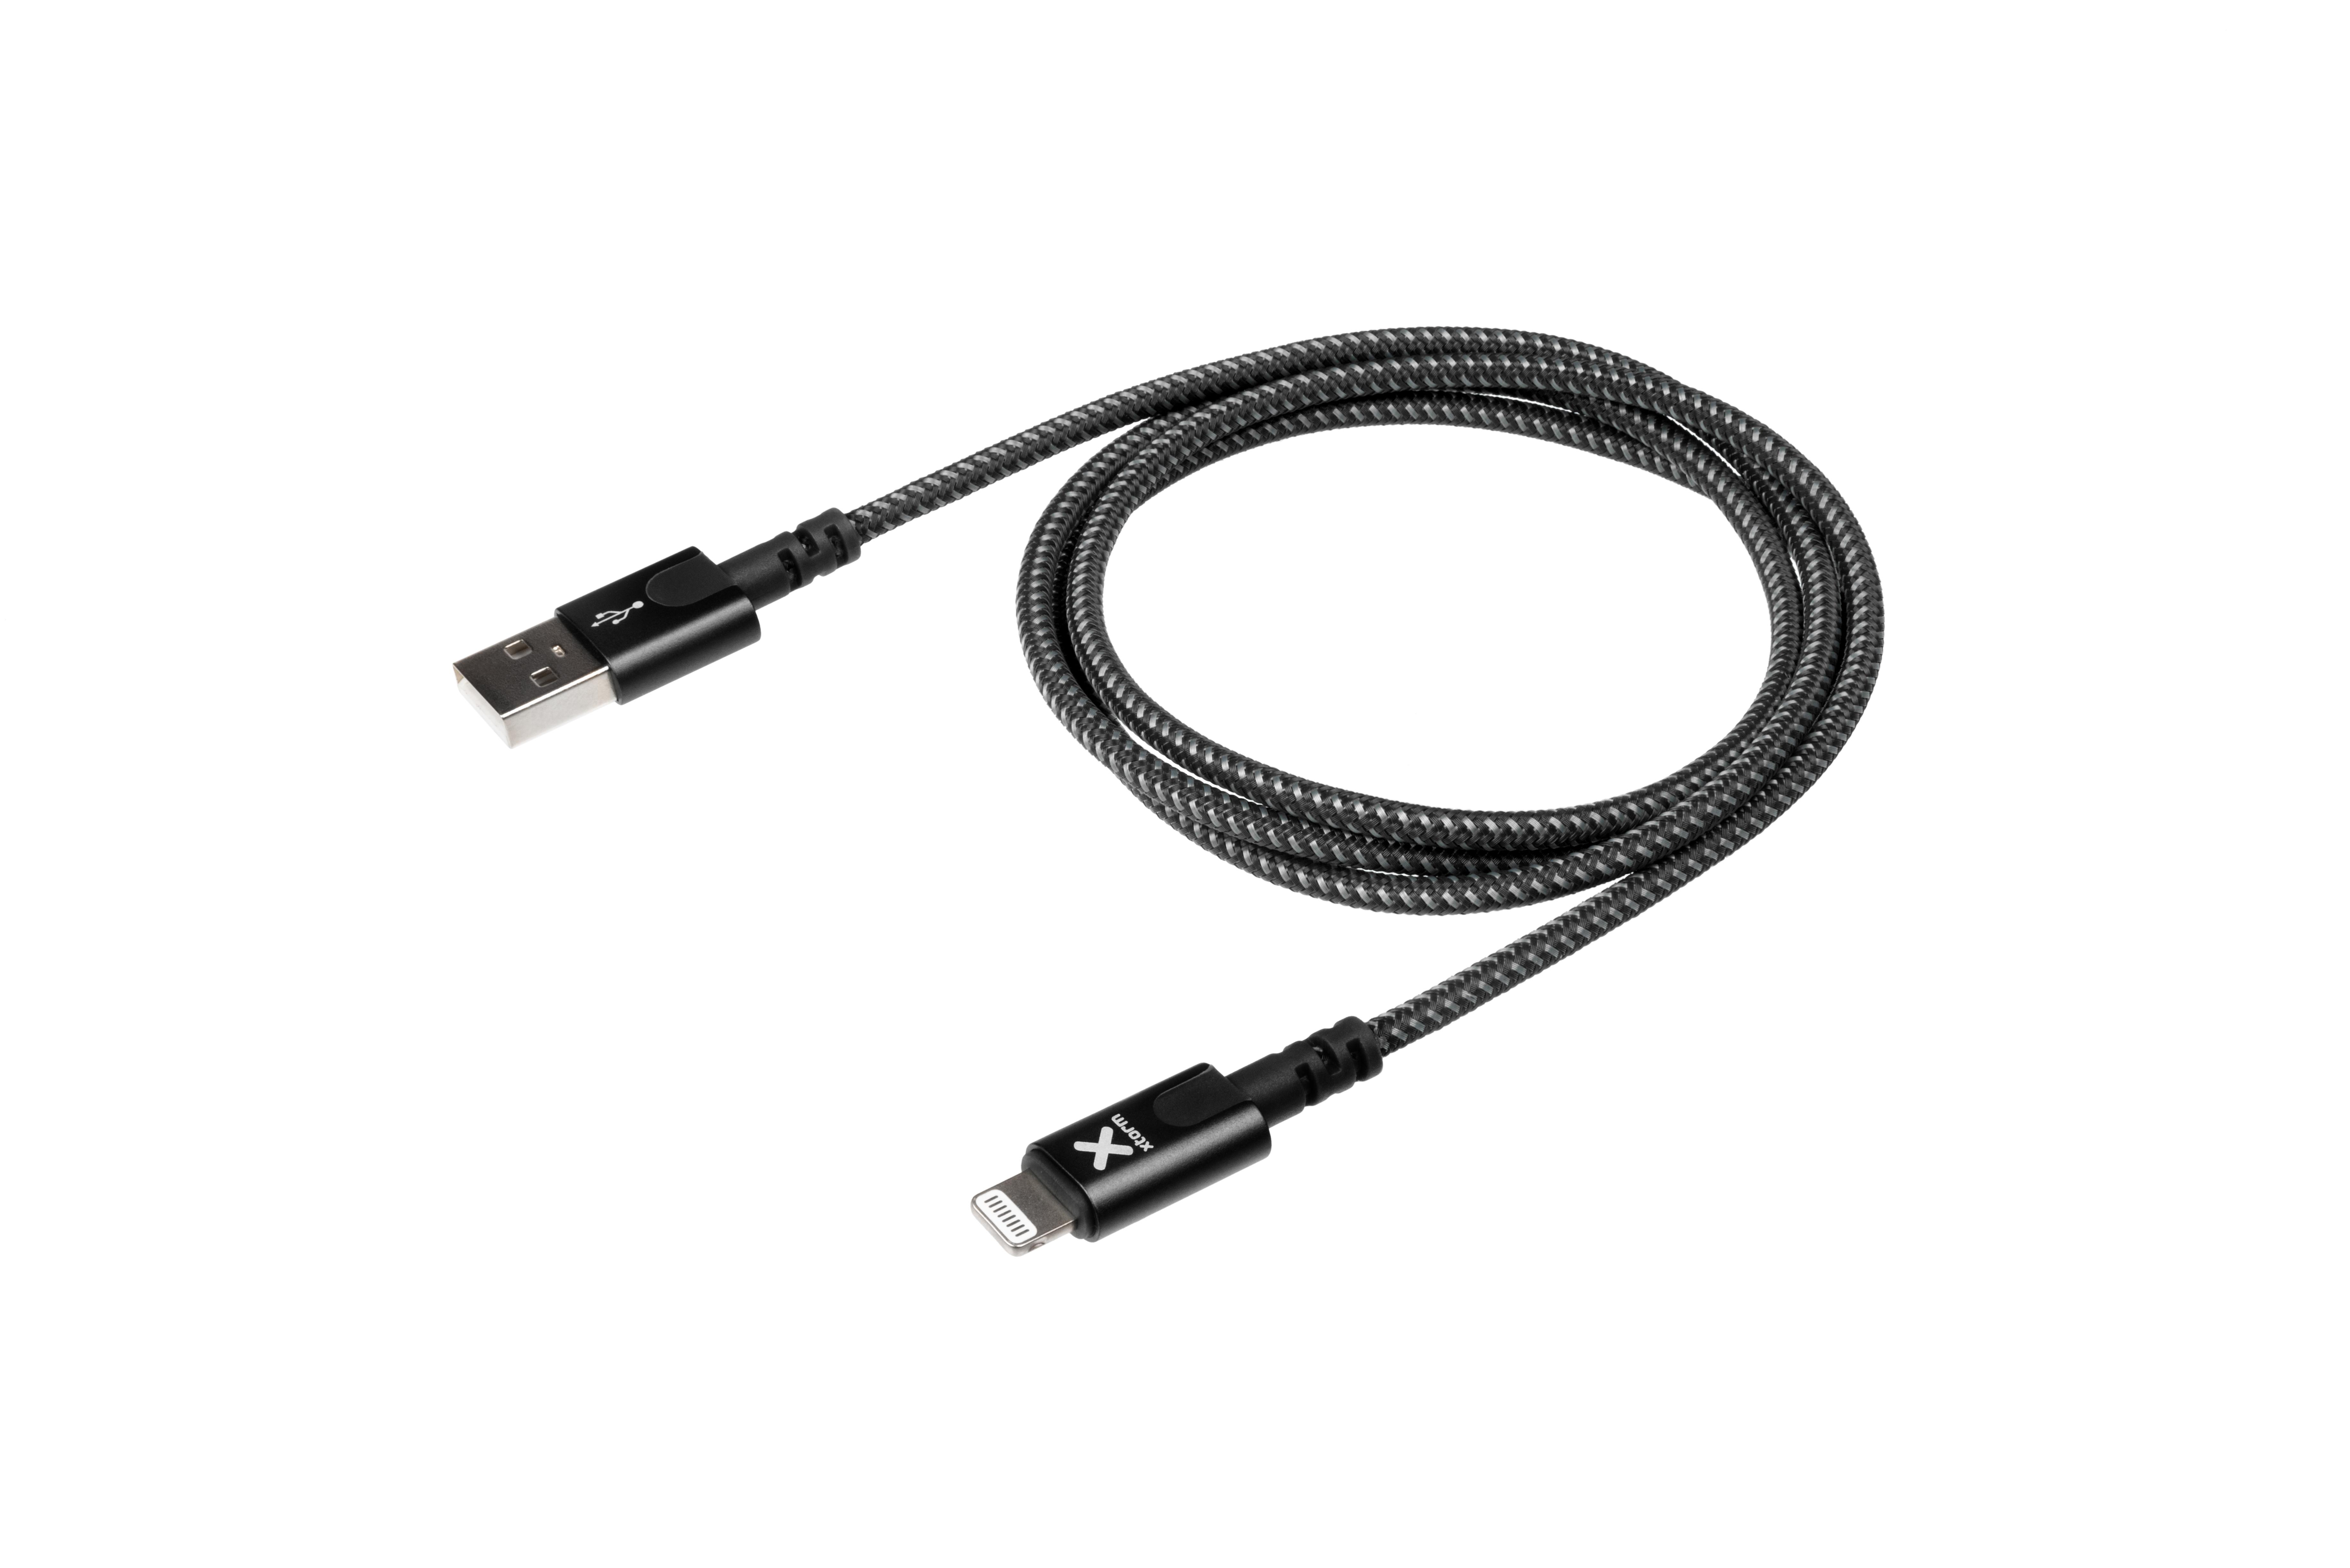 XTORM Original Kabel USB Kabel Schwarz auf Lightning (1m) USB